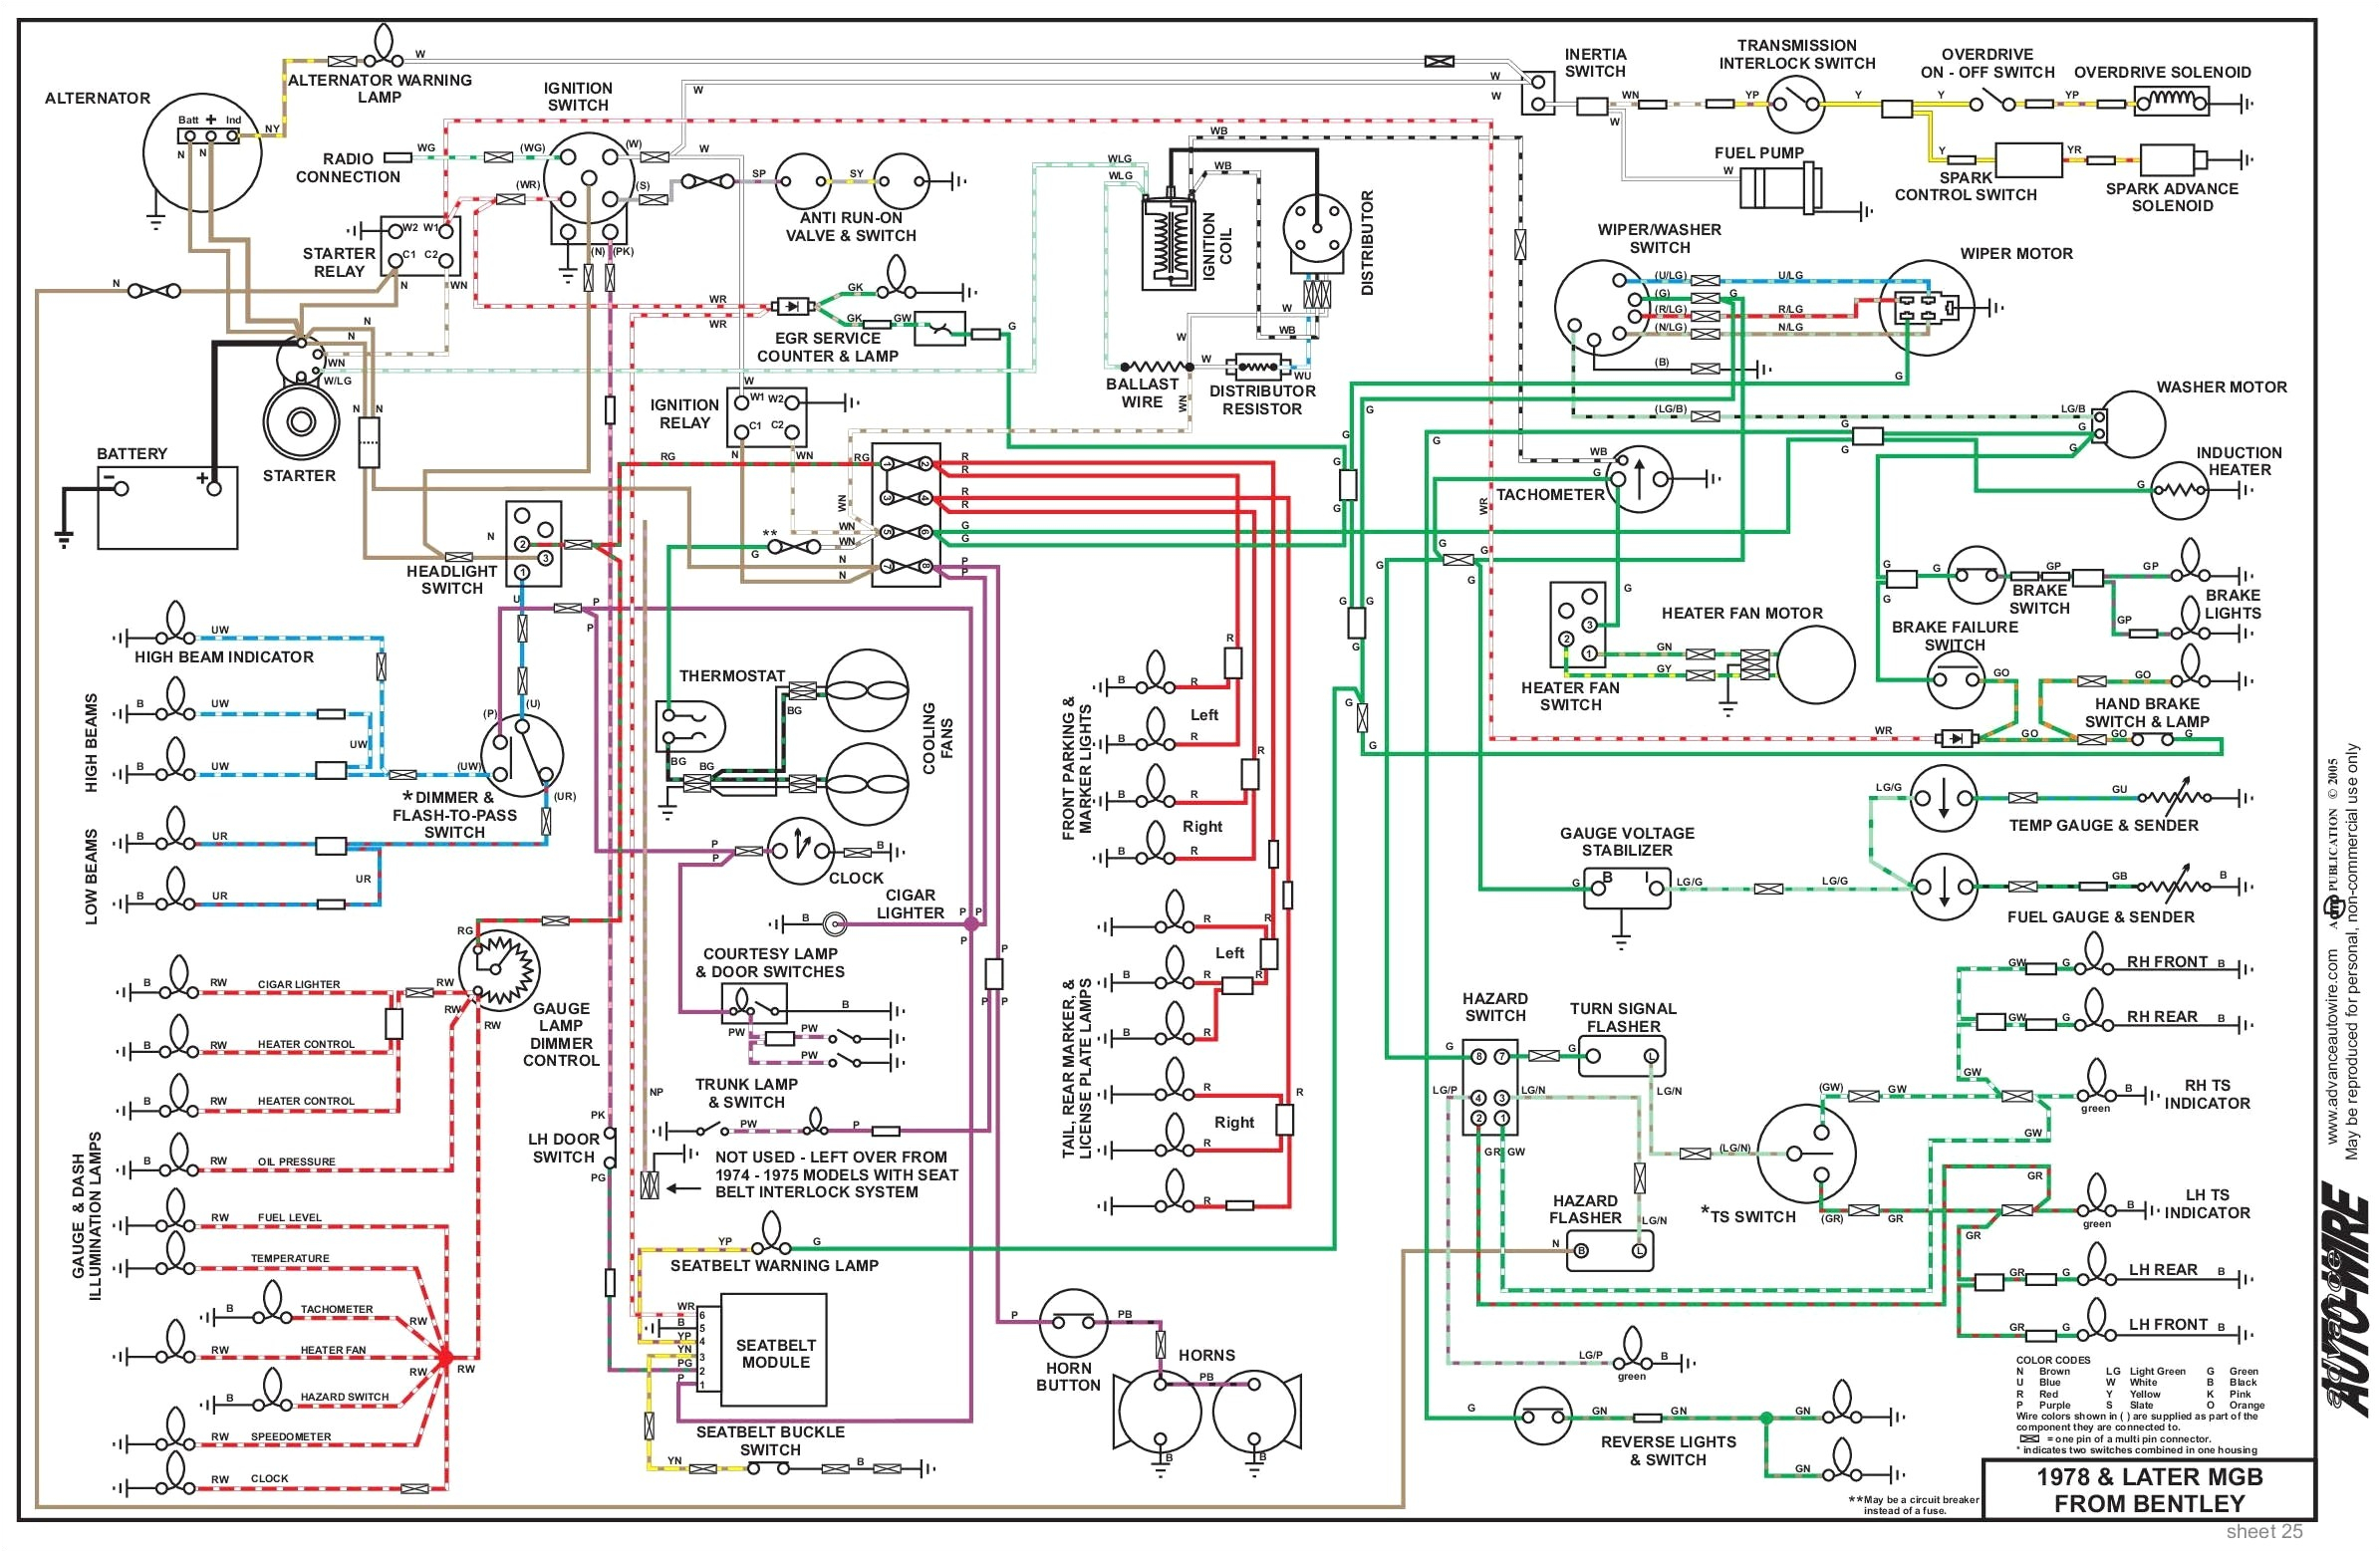 1976 mgb wiring diagram wiring diagram for you 1976 mgb wiring diagram od